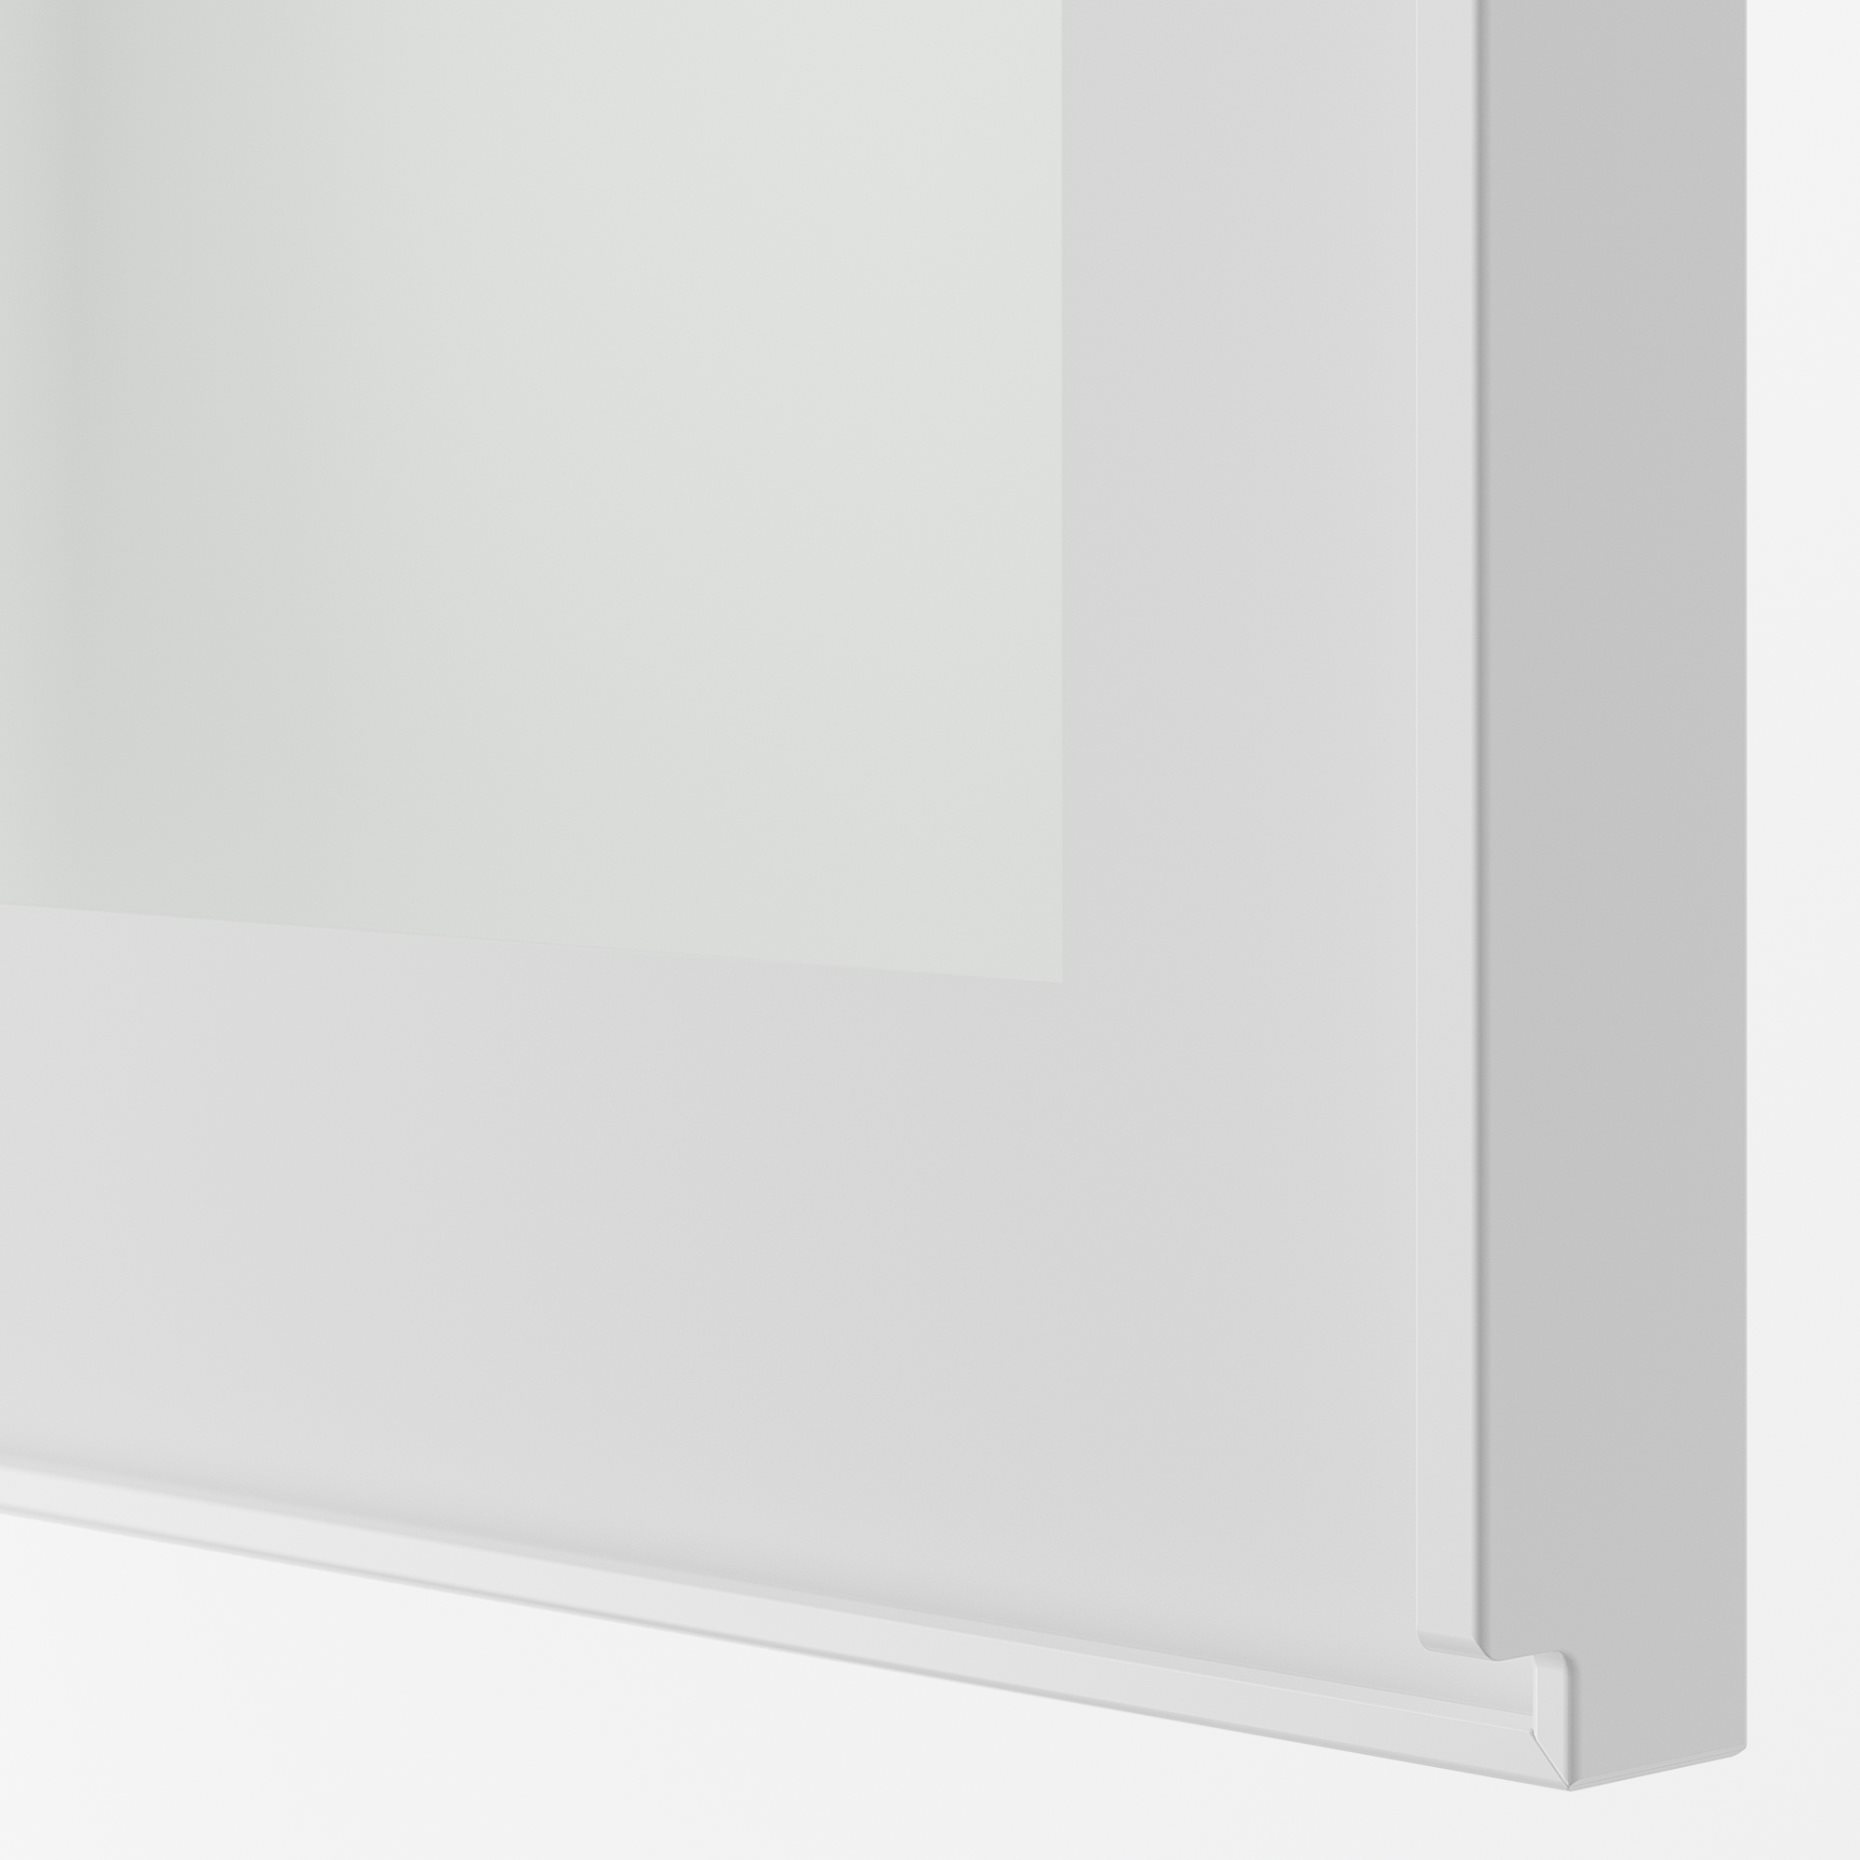 HEJSTA, γυάλινη πόρτα, 30x60 cm, 705.266.31